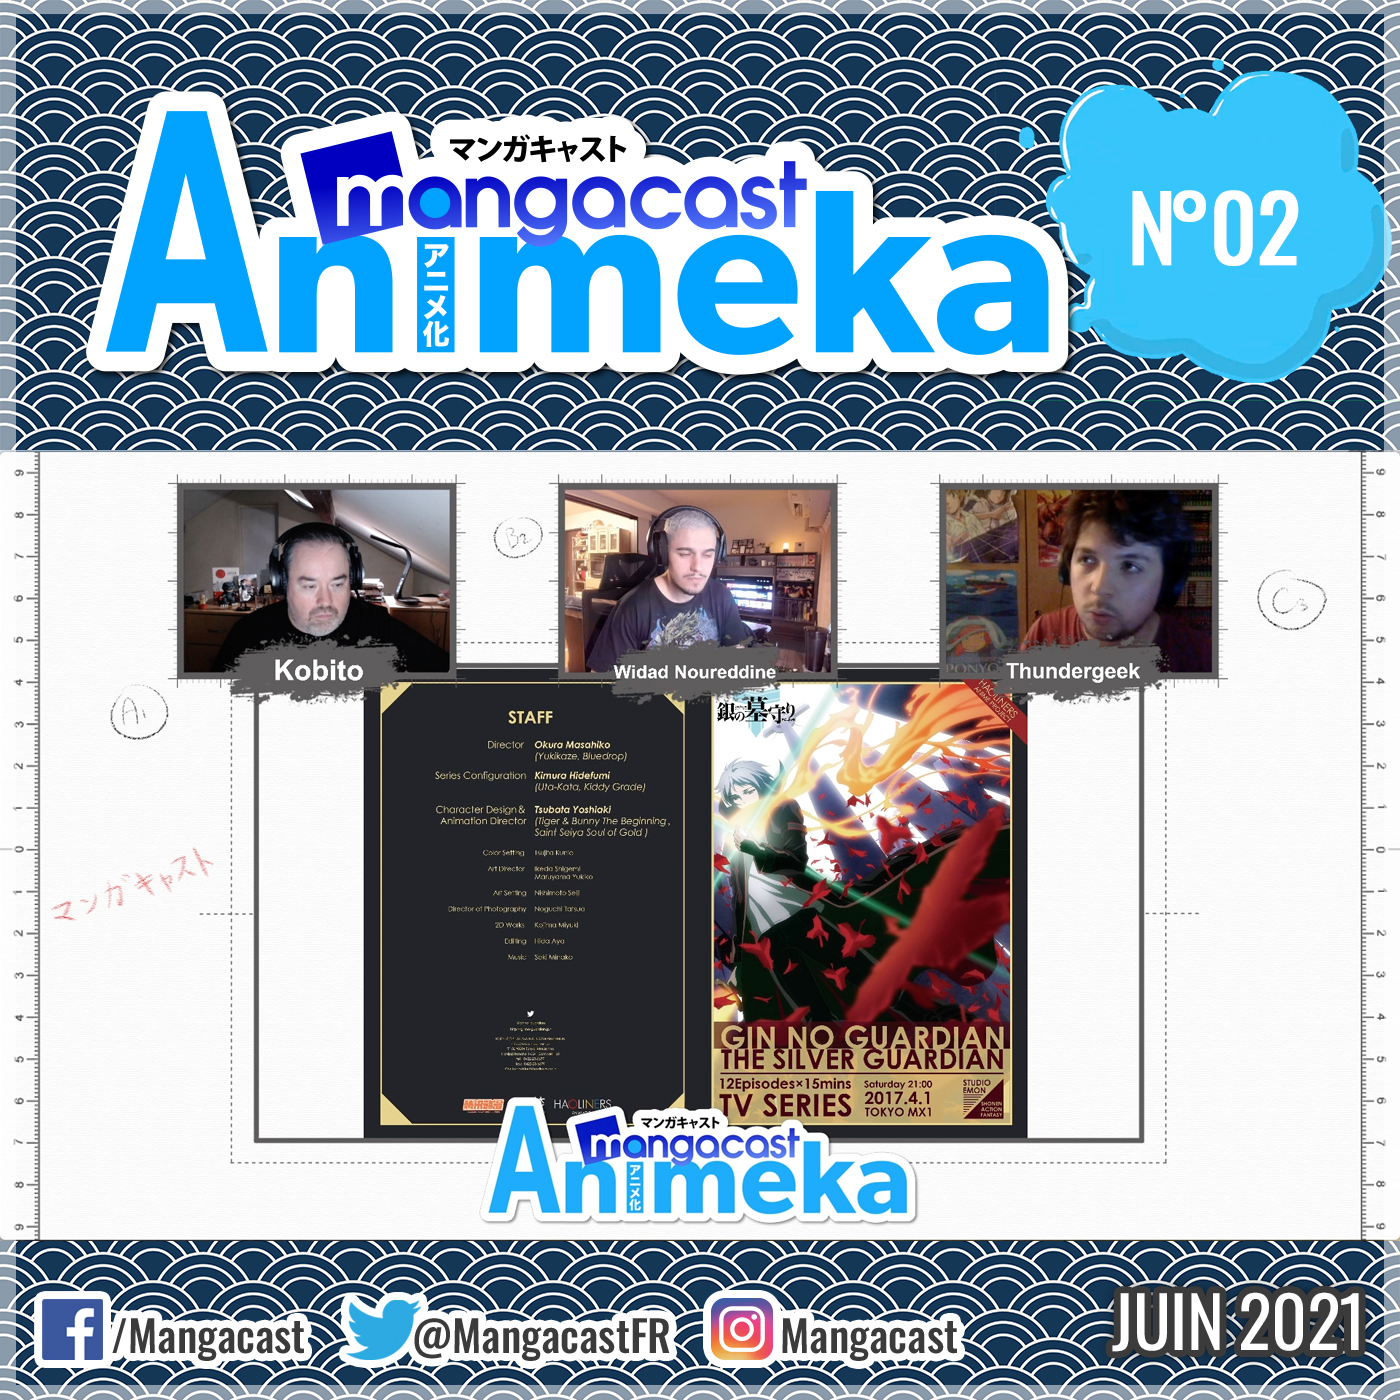 Cartouche de la 2e émission Animeka